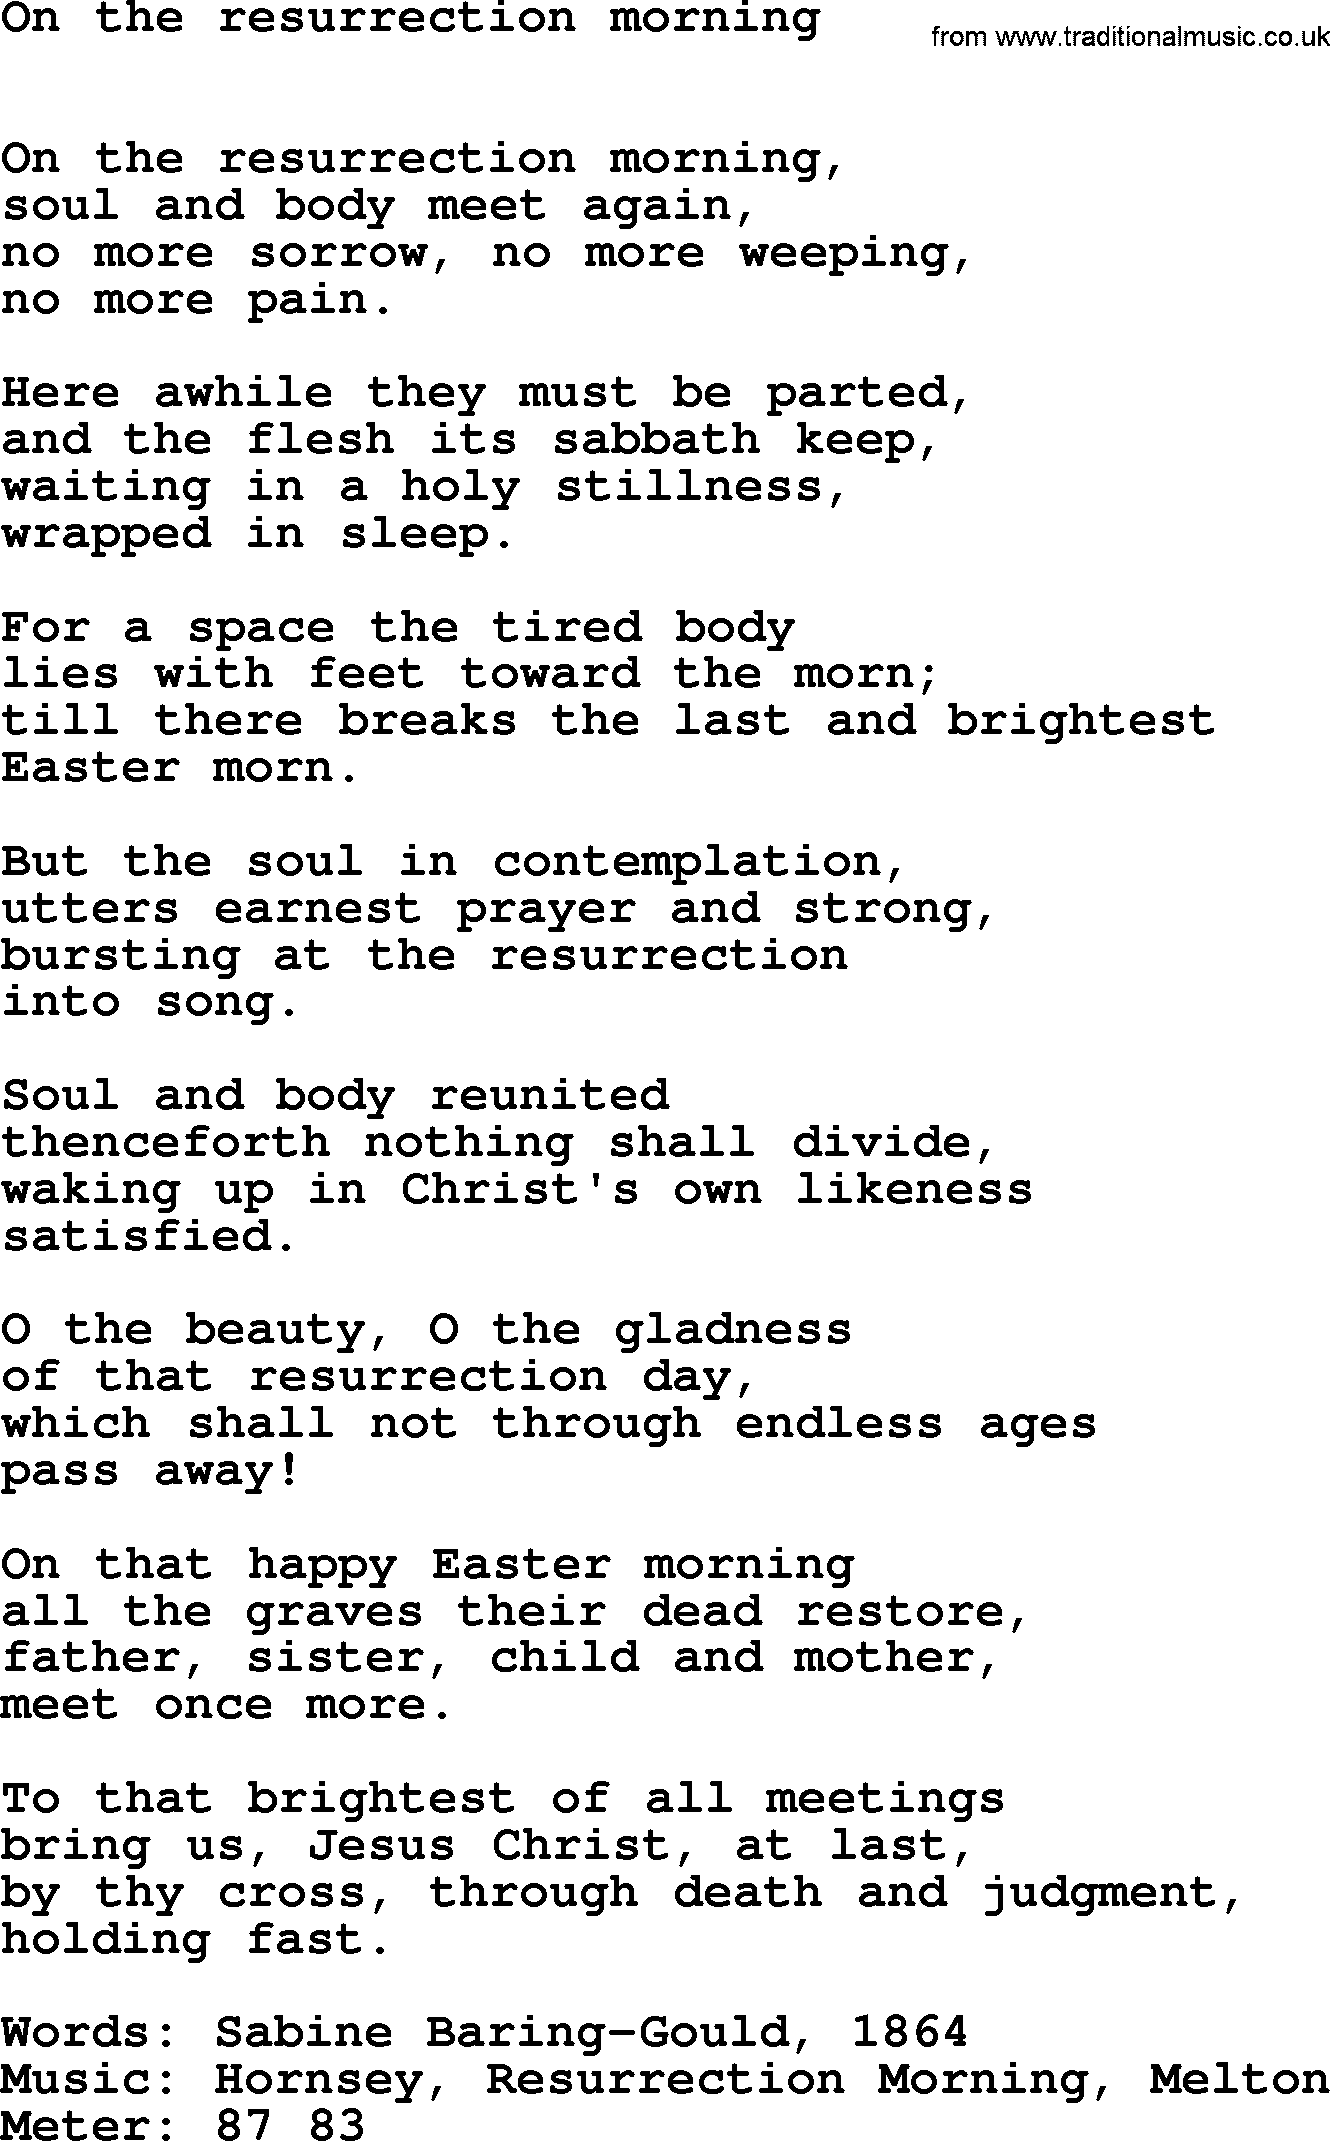 Easter Hymns, Hymn: On The Resurrection Morning, lyrics with PDF